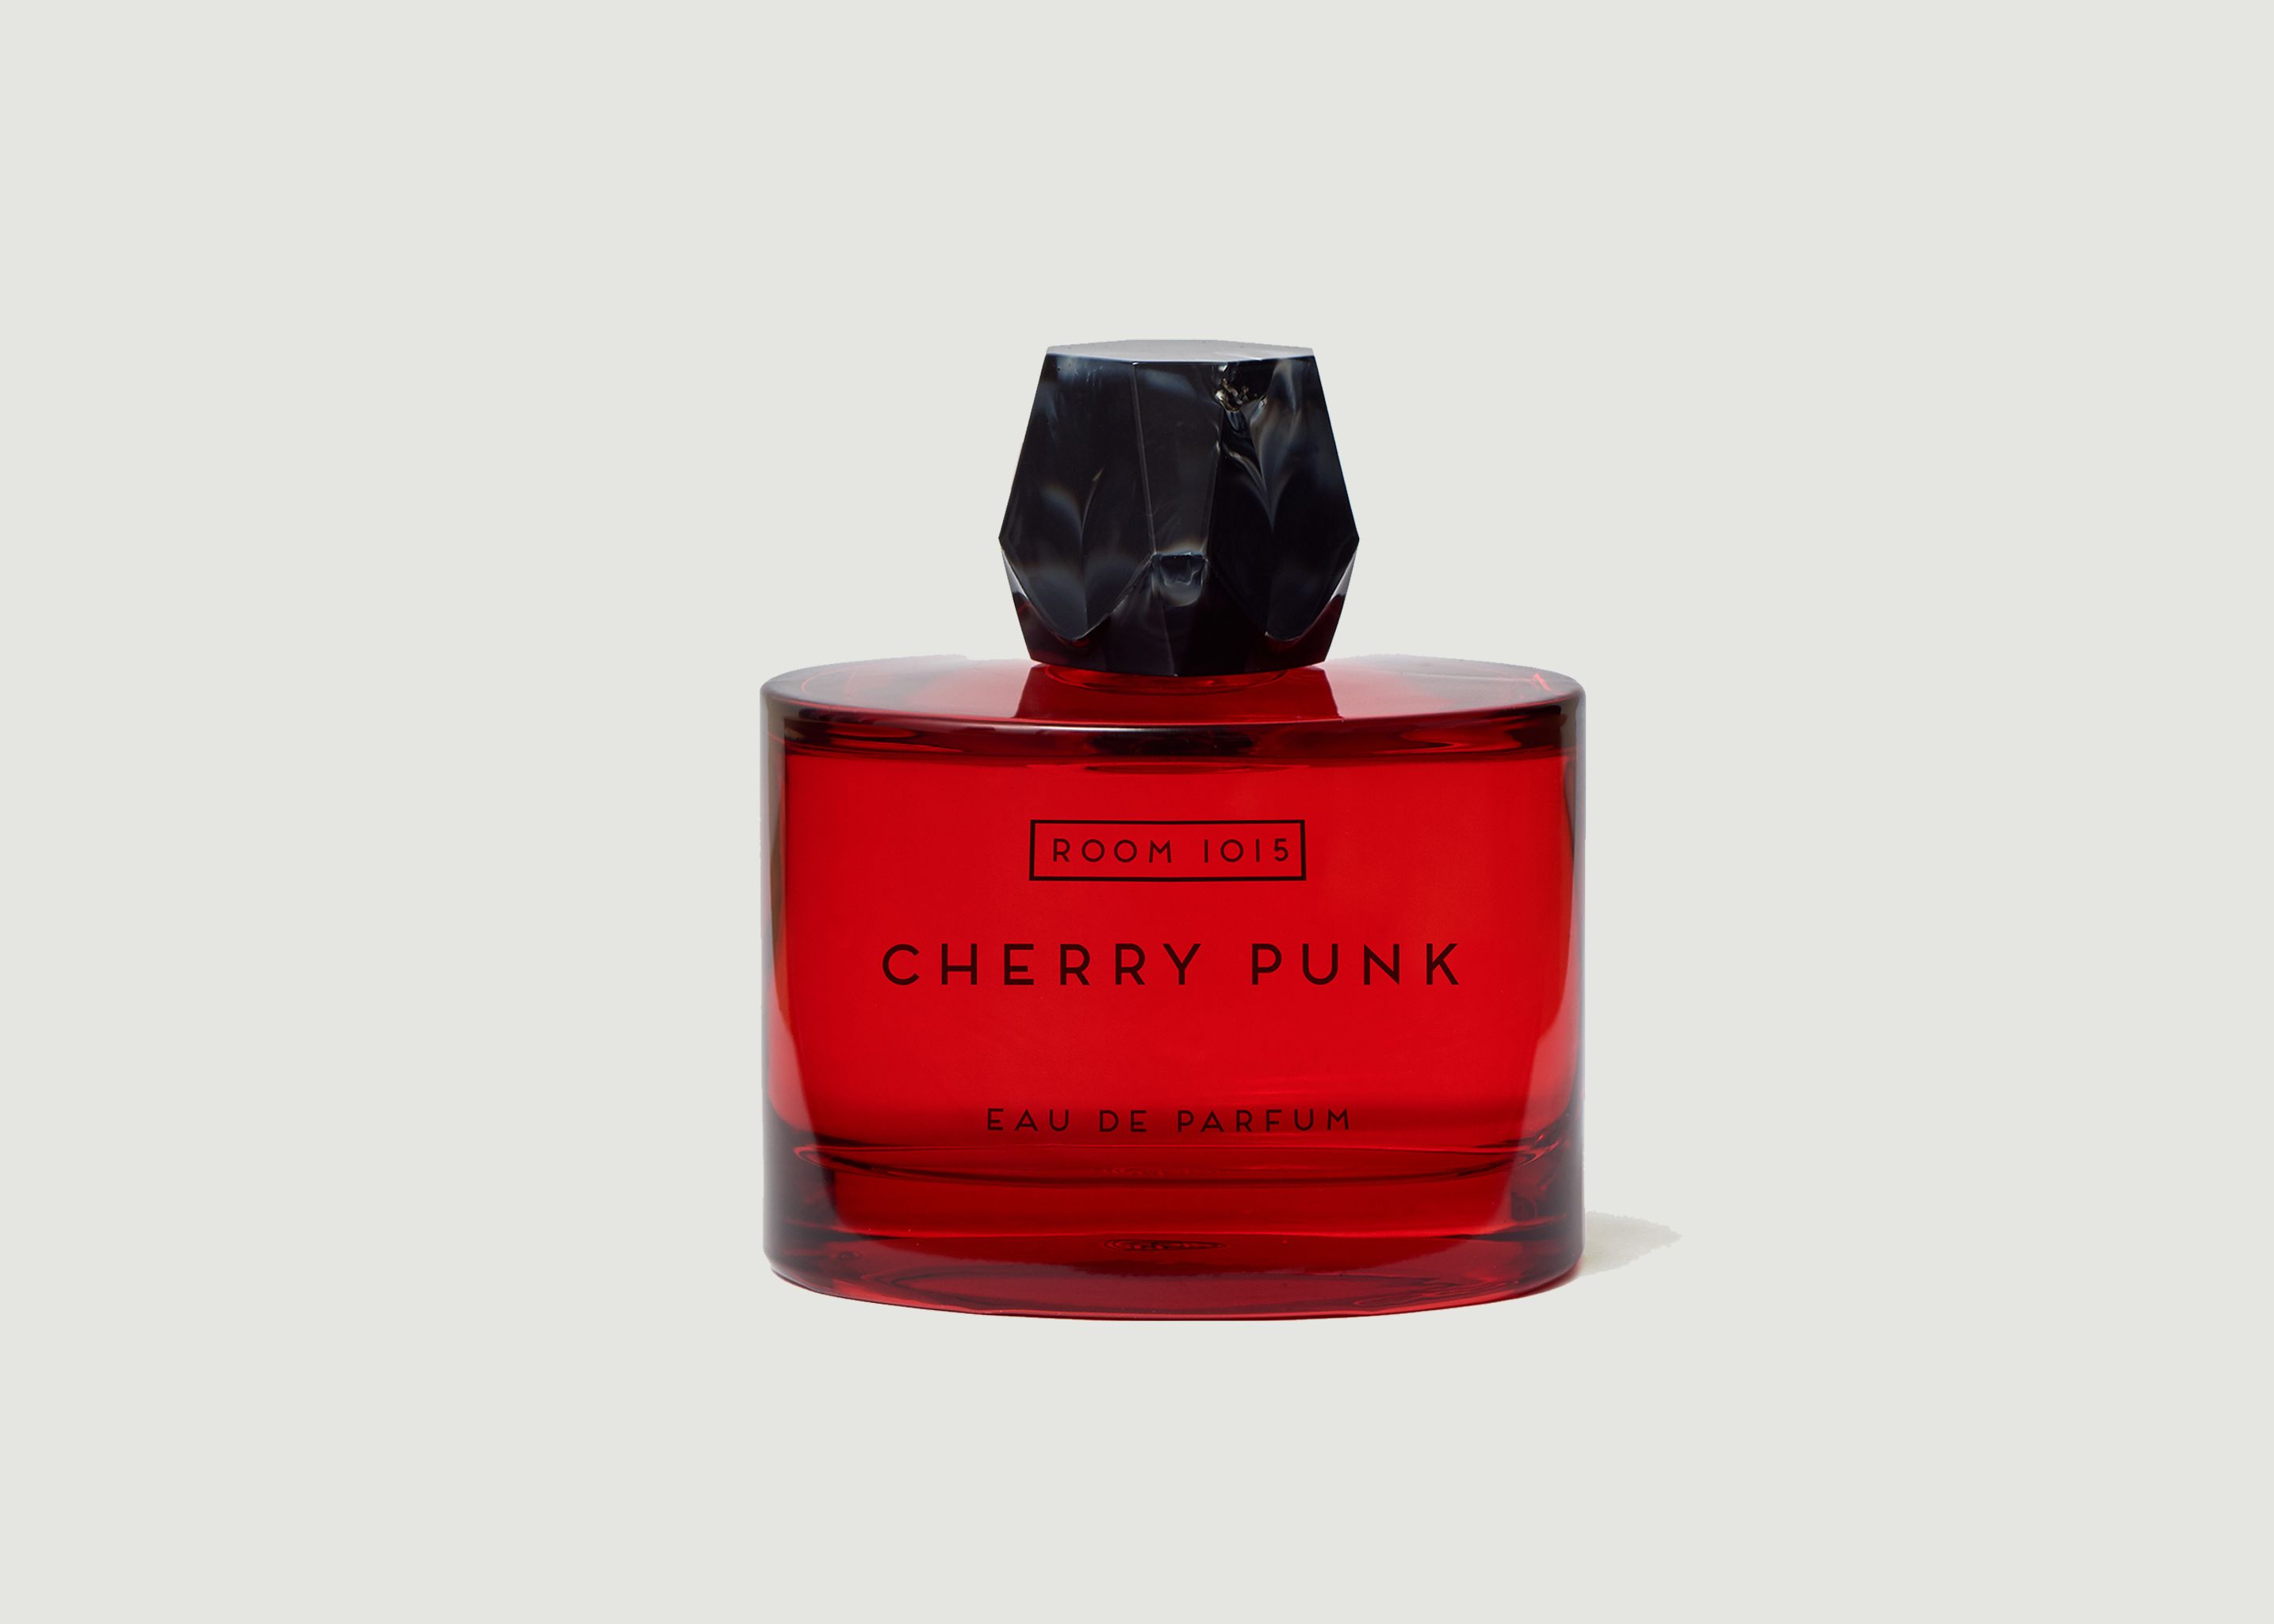 Perfume Cherry Punk - Room 1015